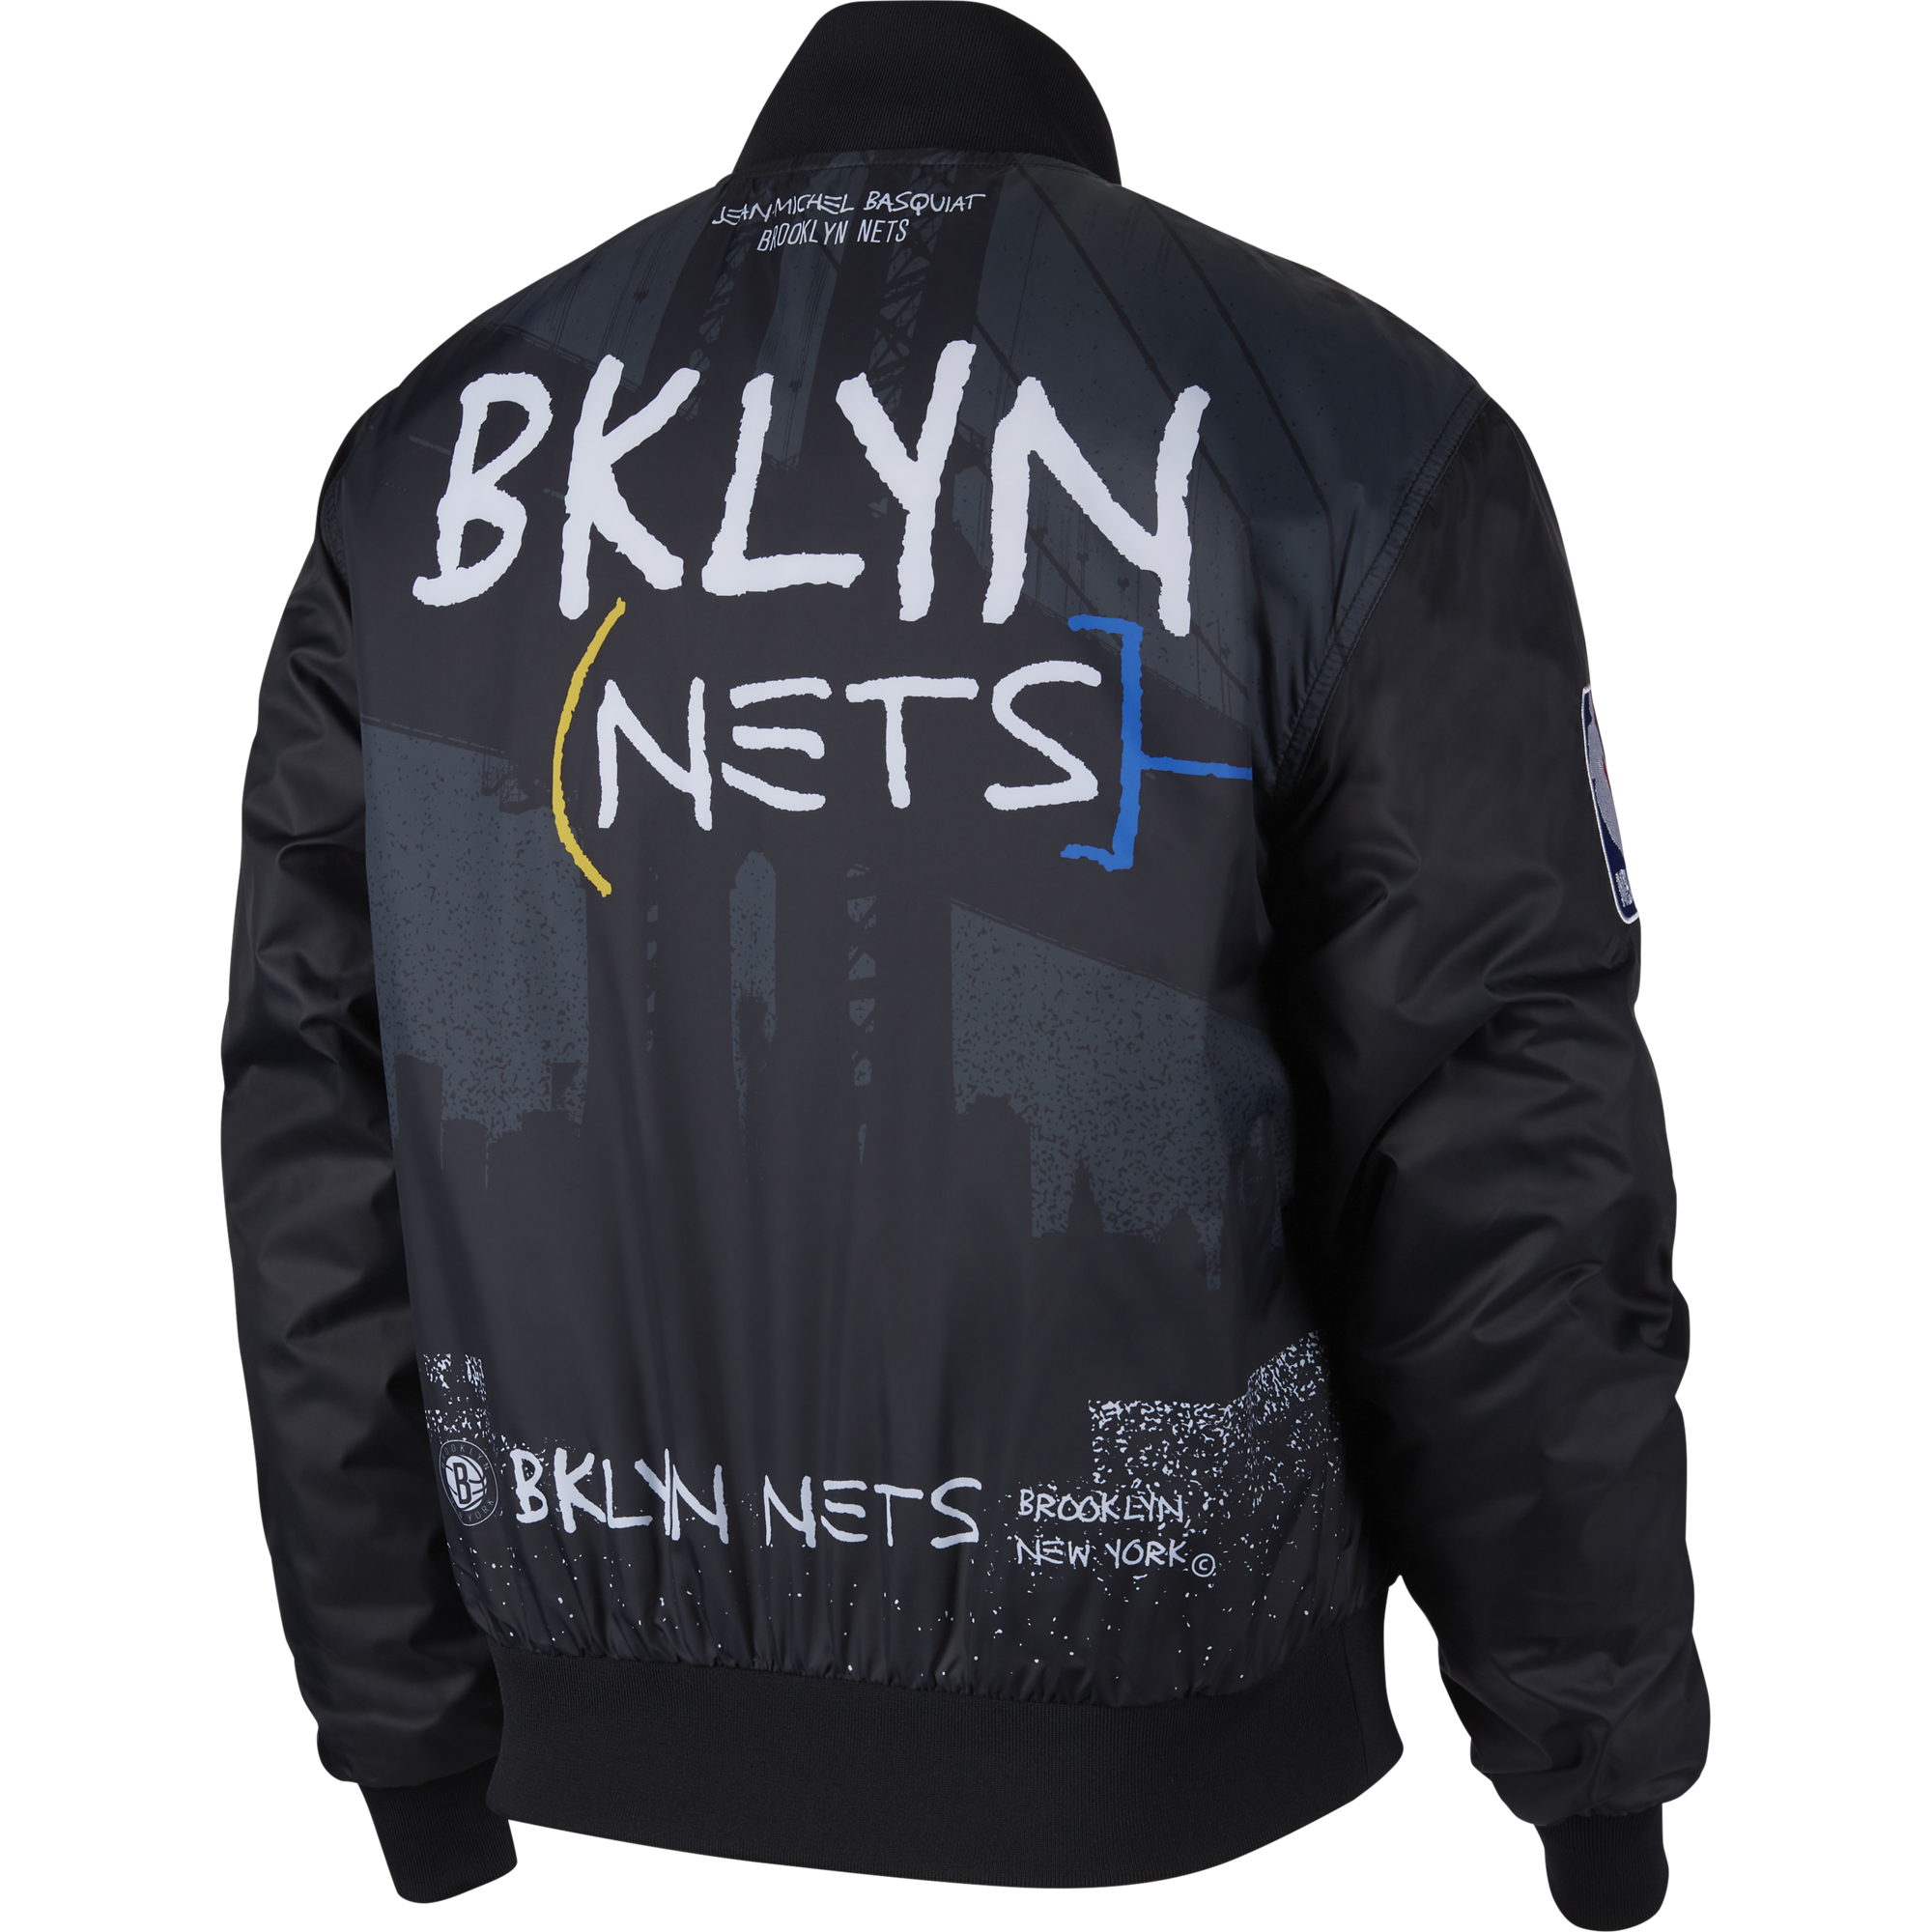 Brooklyn Nets New York Black Jacket